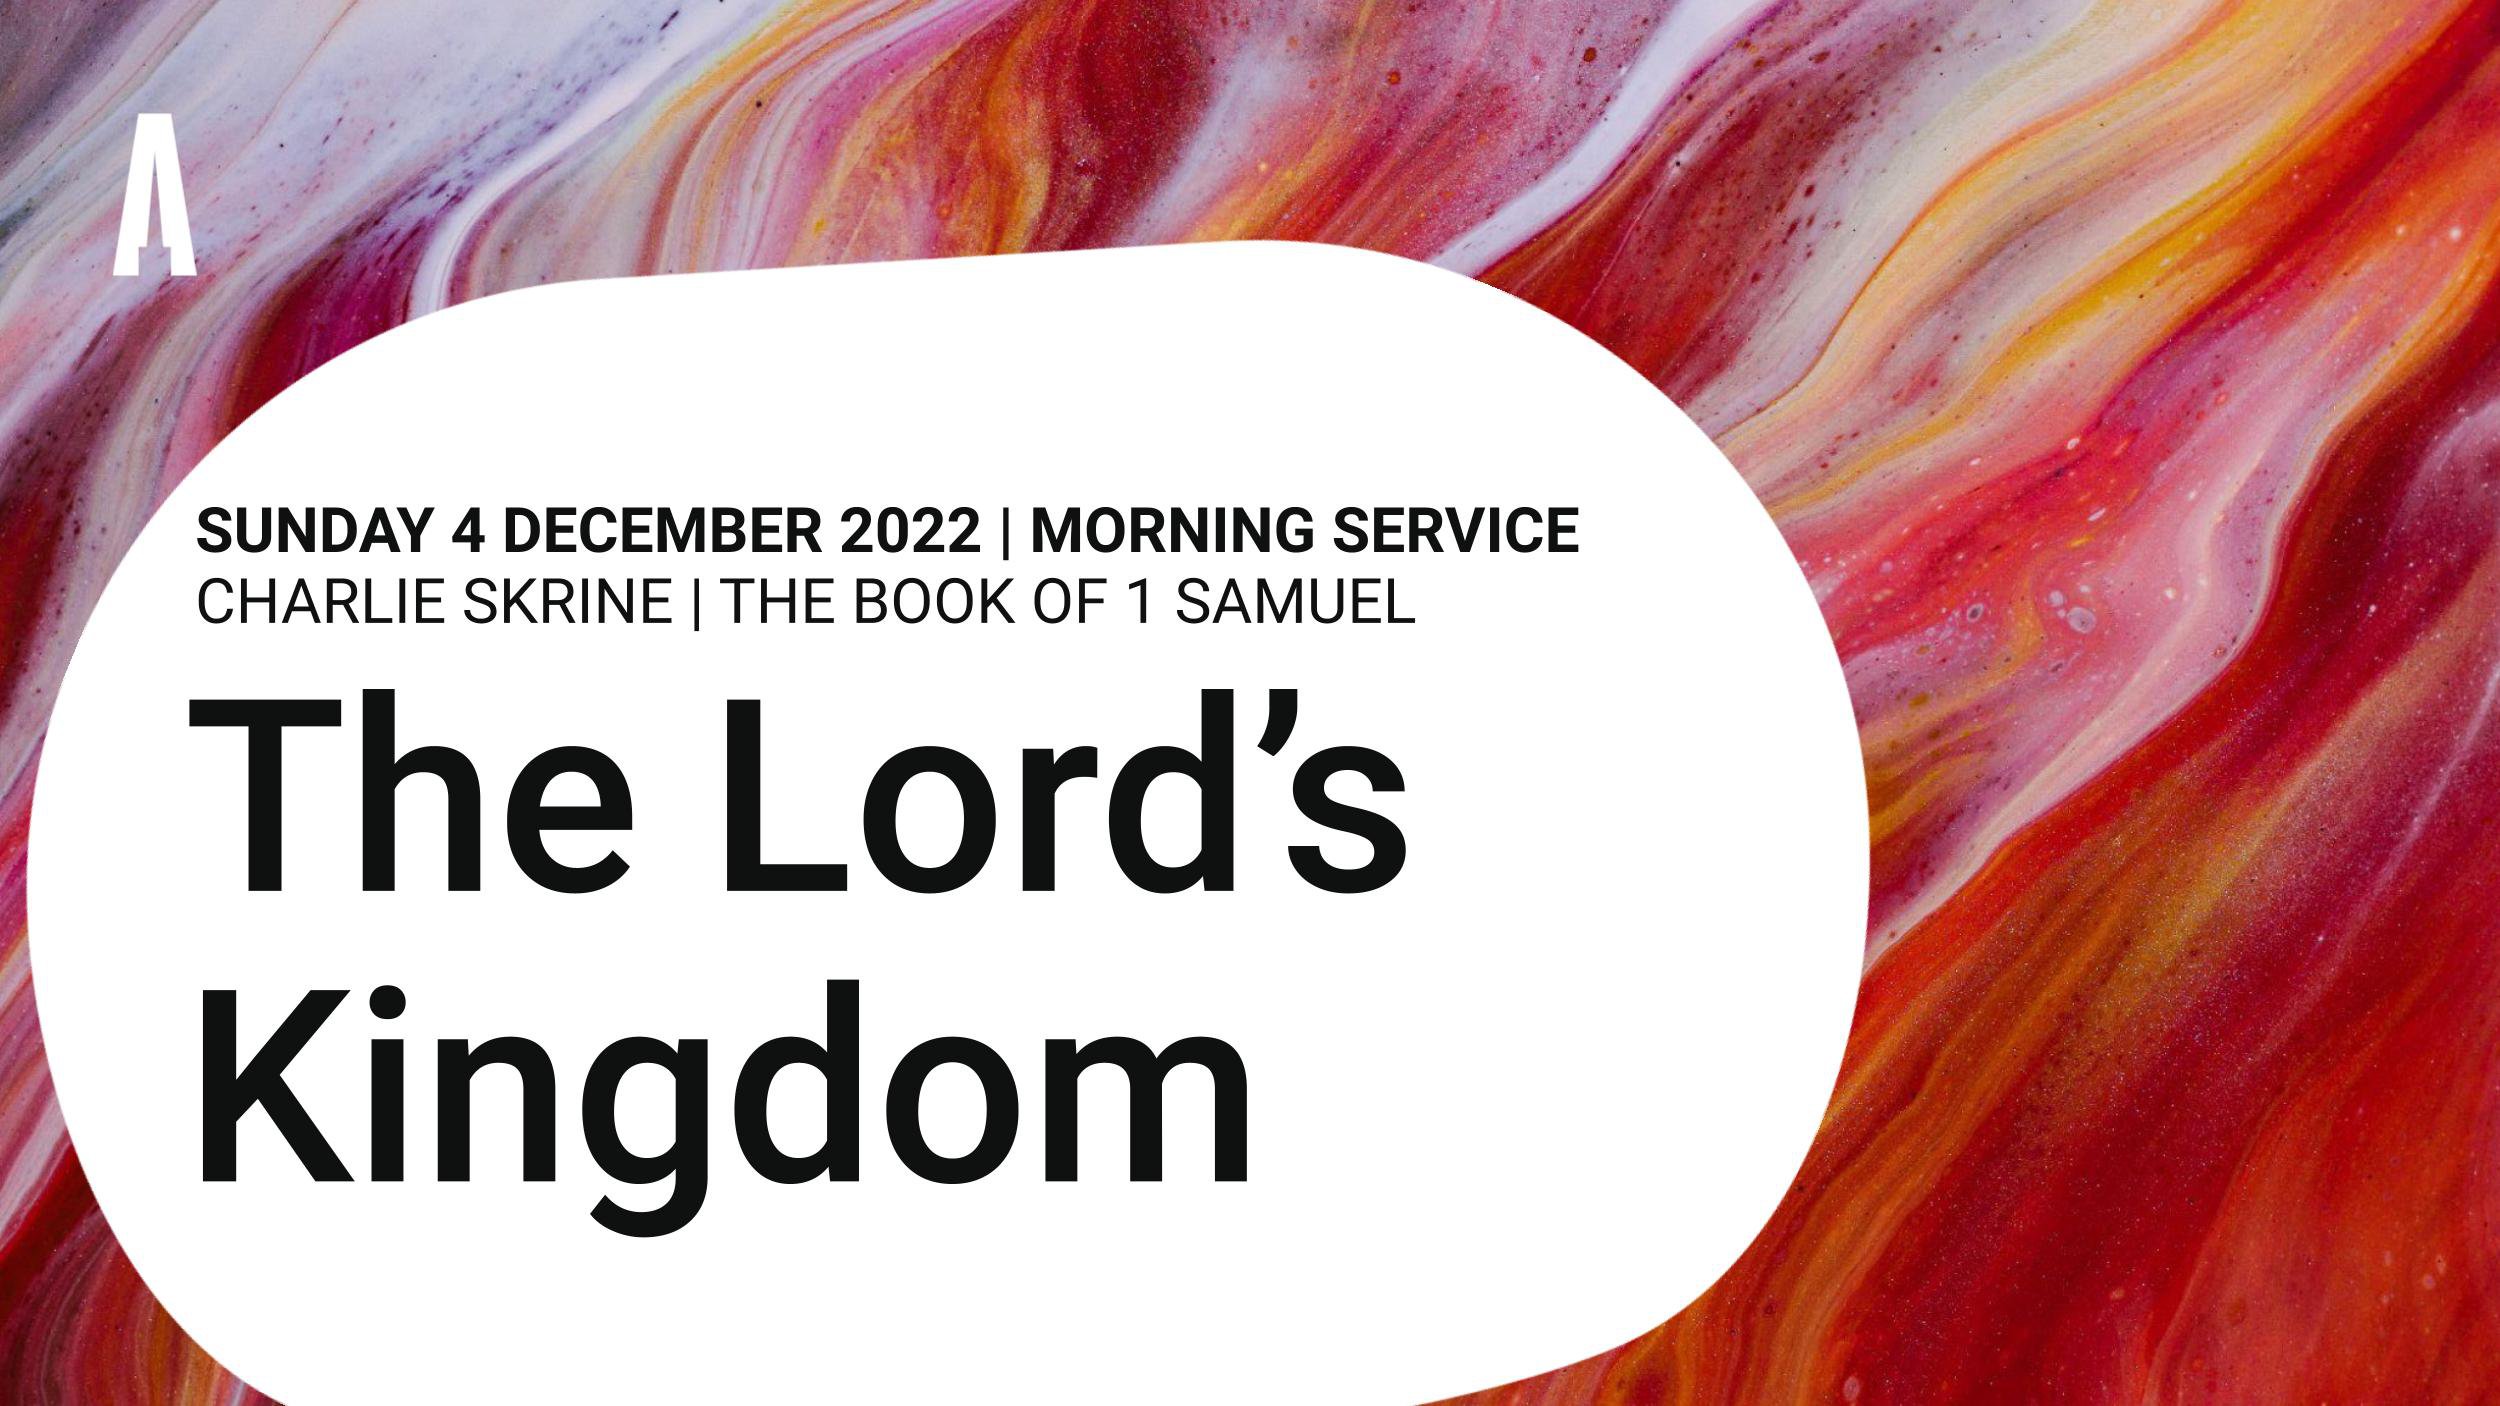 The Lord’s Kingdom